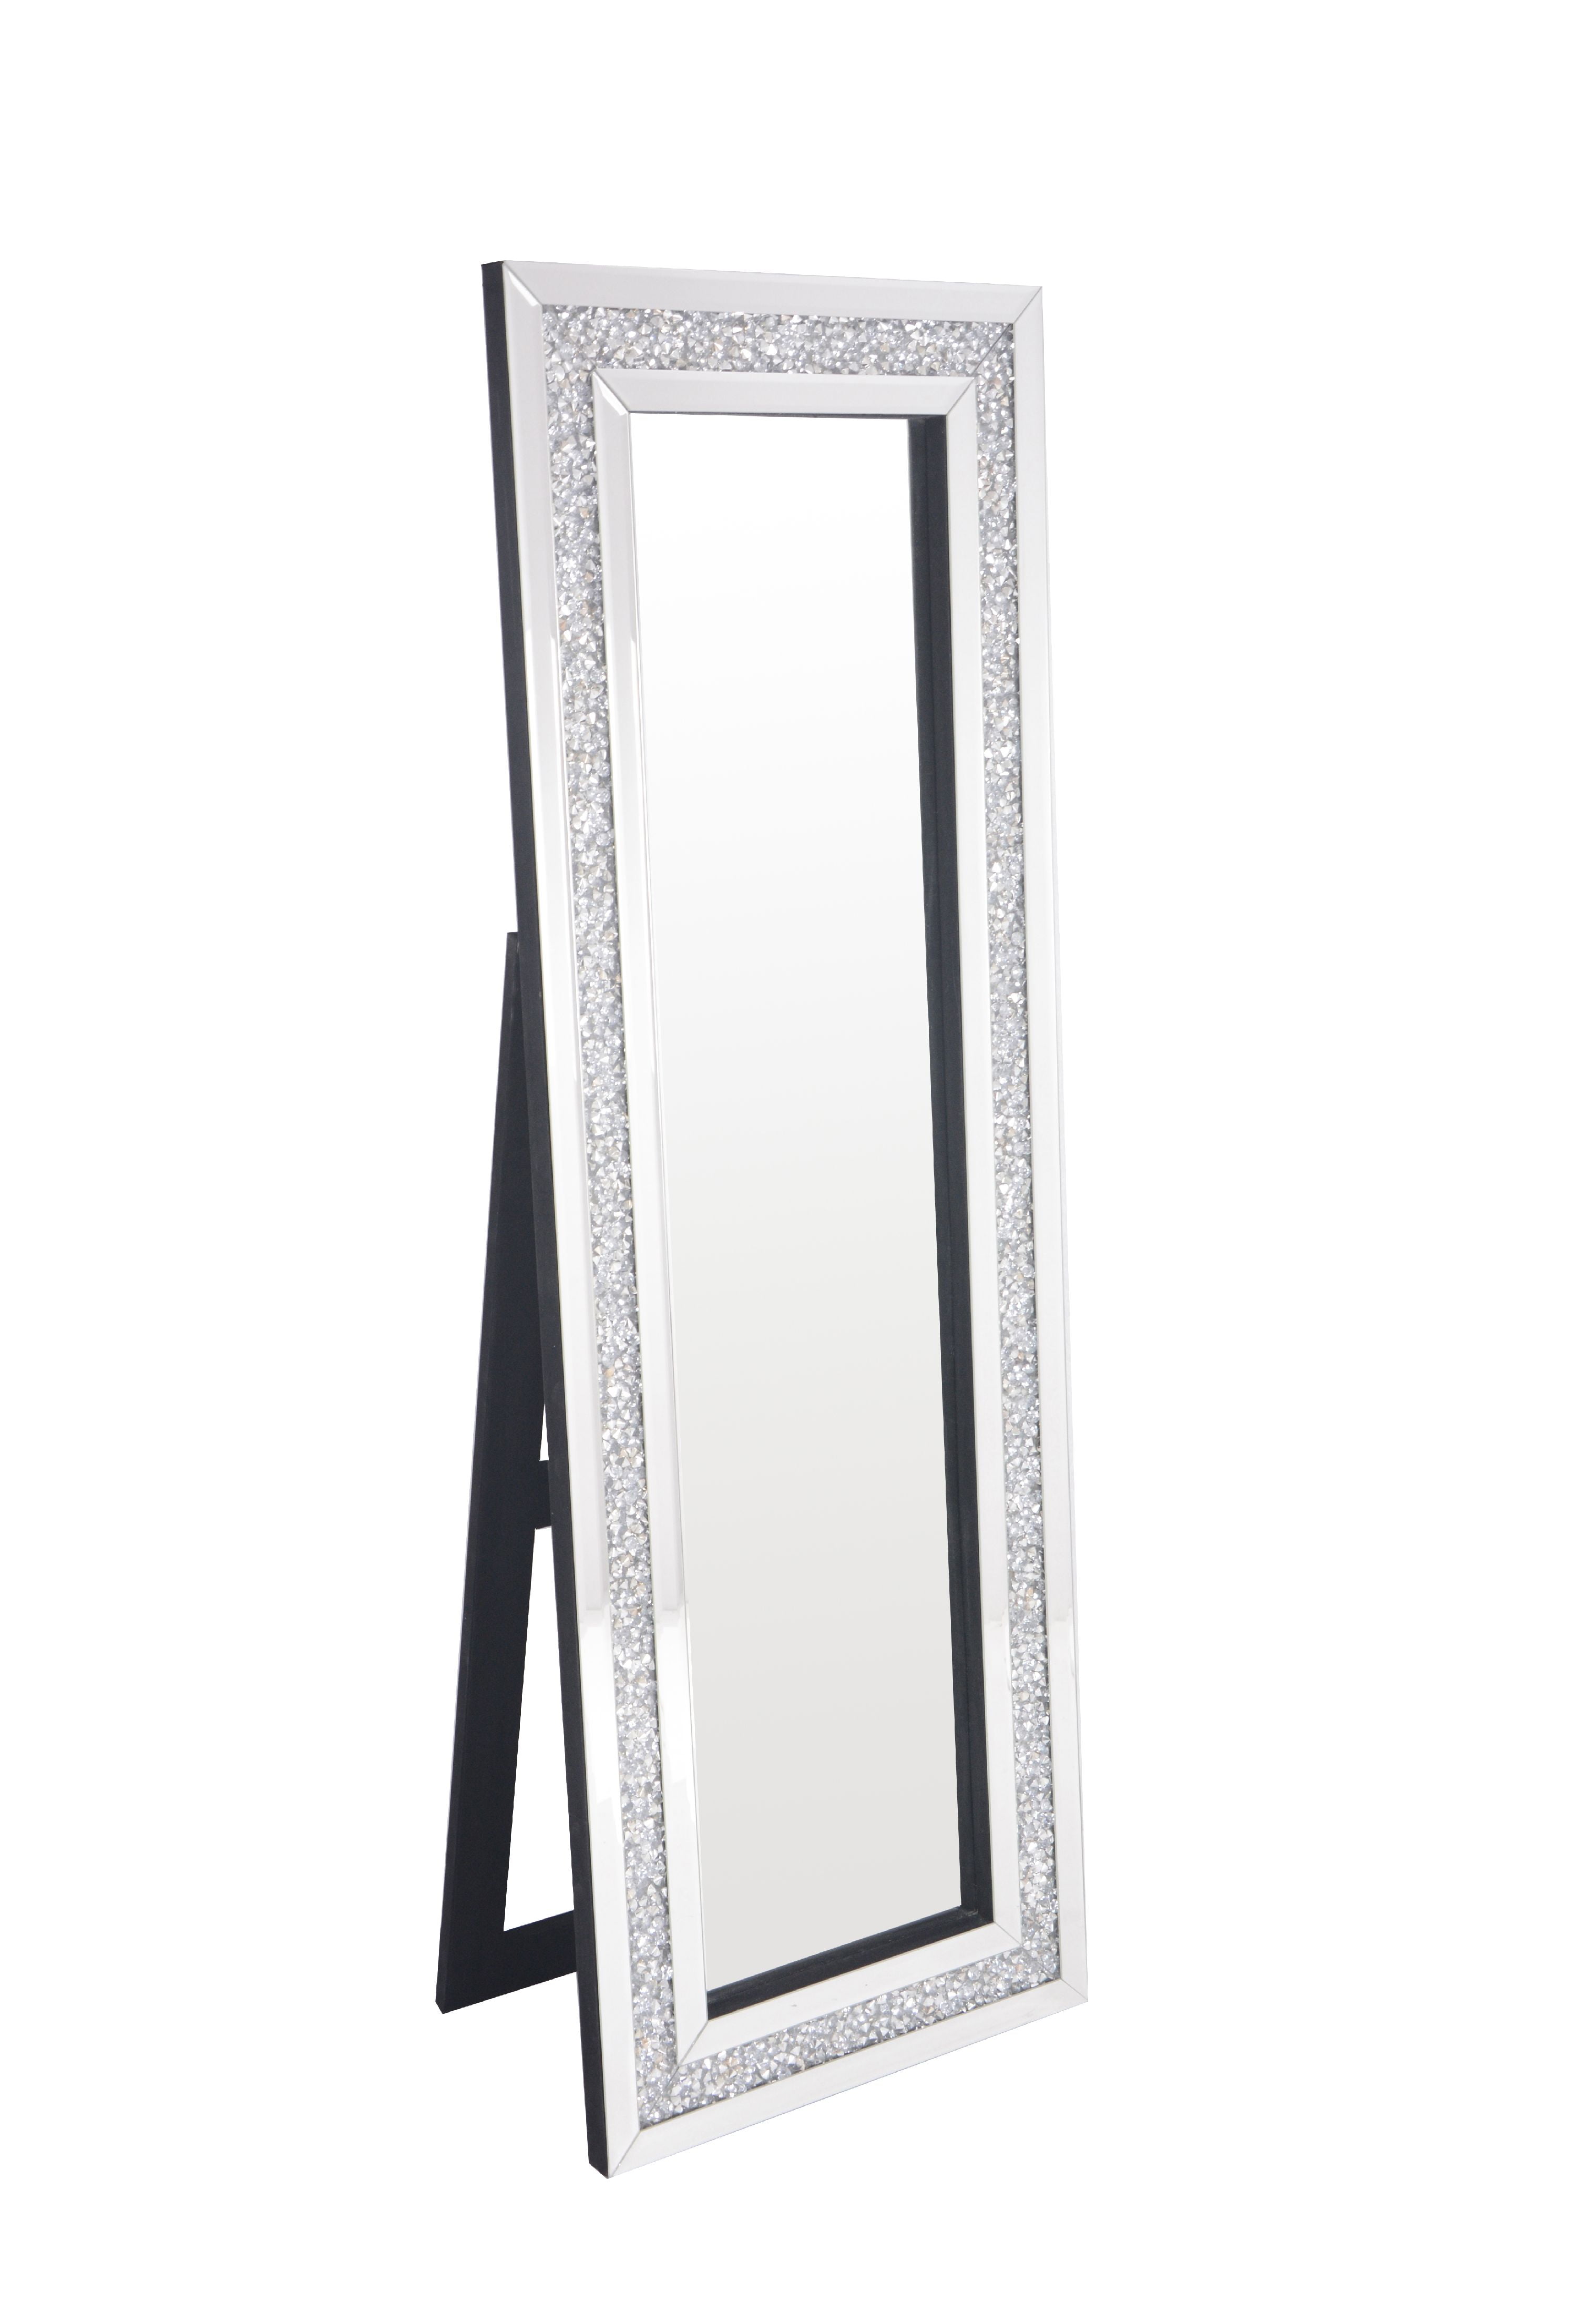 Silver Diamond Frame Standing Floor Mirror - Walmart.com - Walmart.com